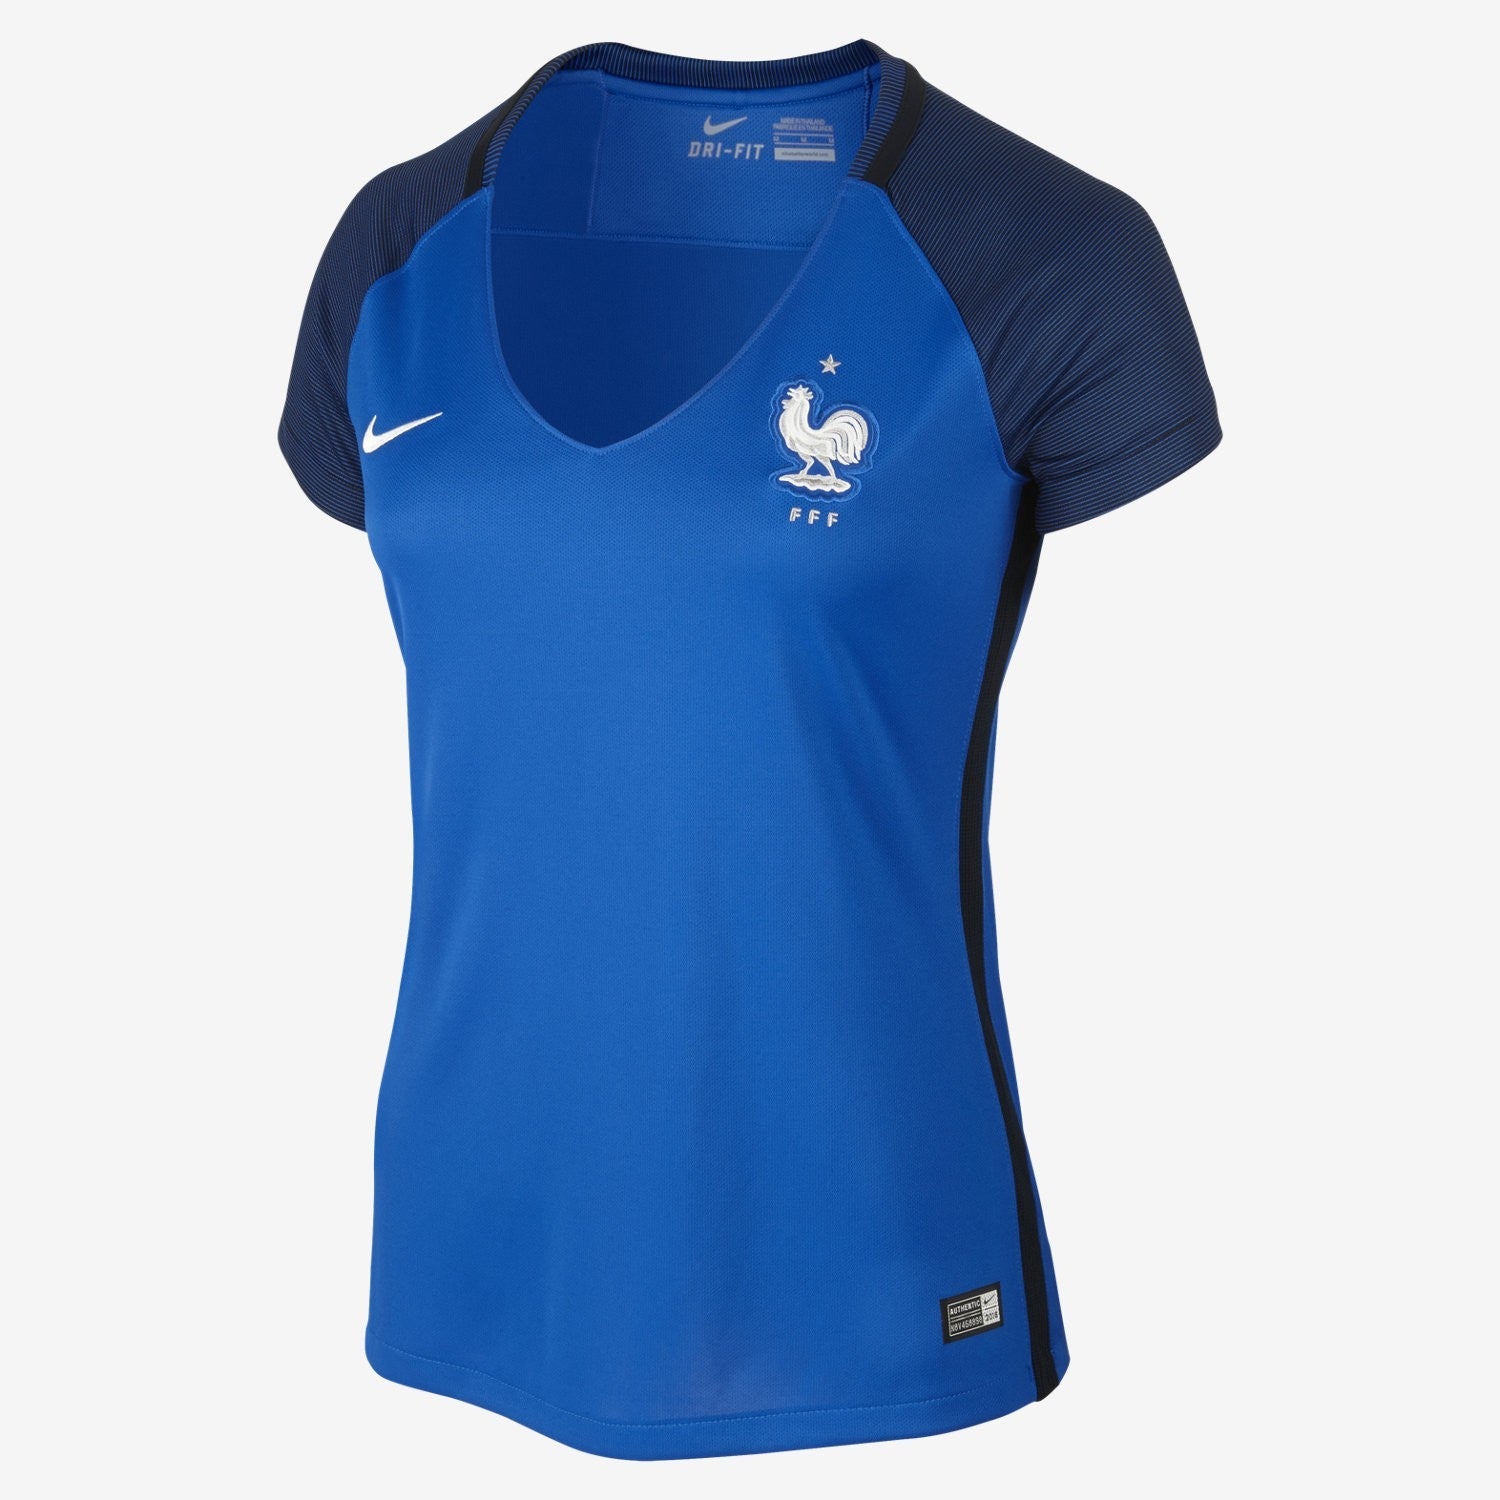 Nike Women's France Home Jersey 16